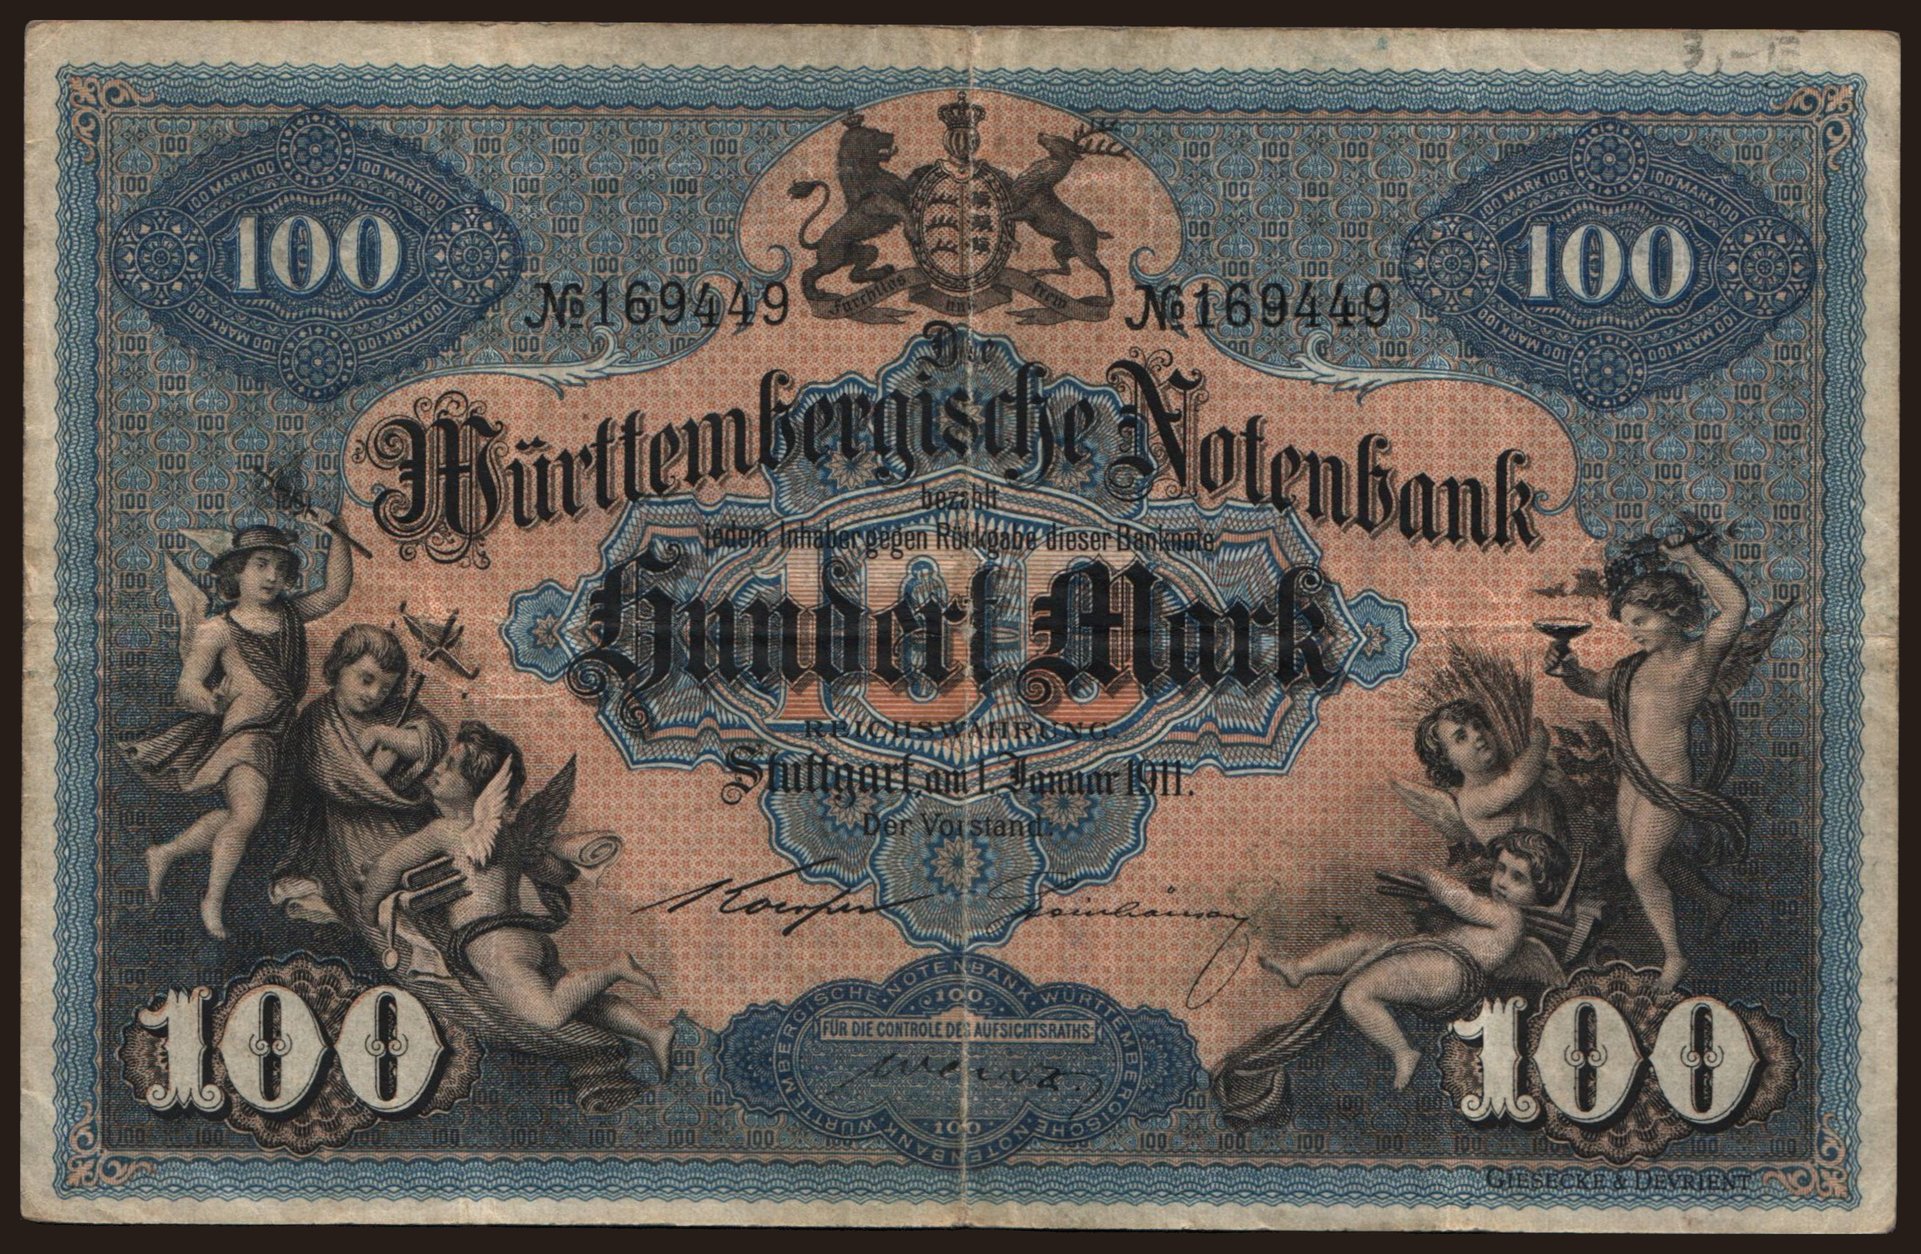 Württembergische Notenbank, 100 Mark, 1911